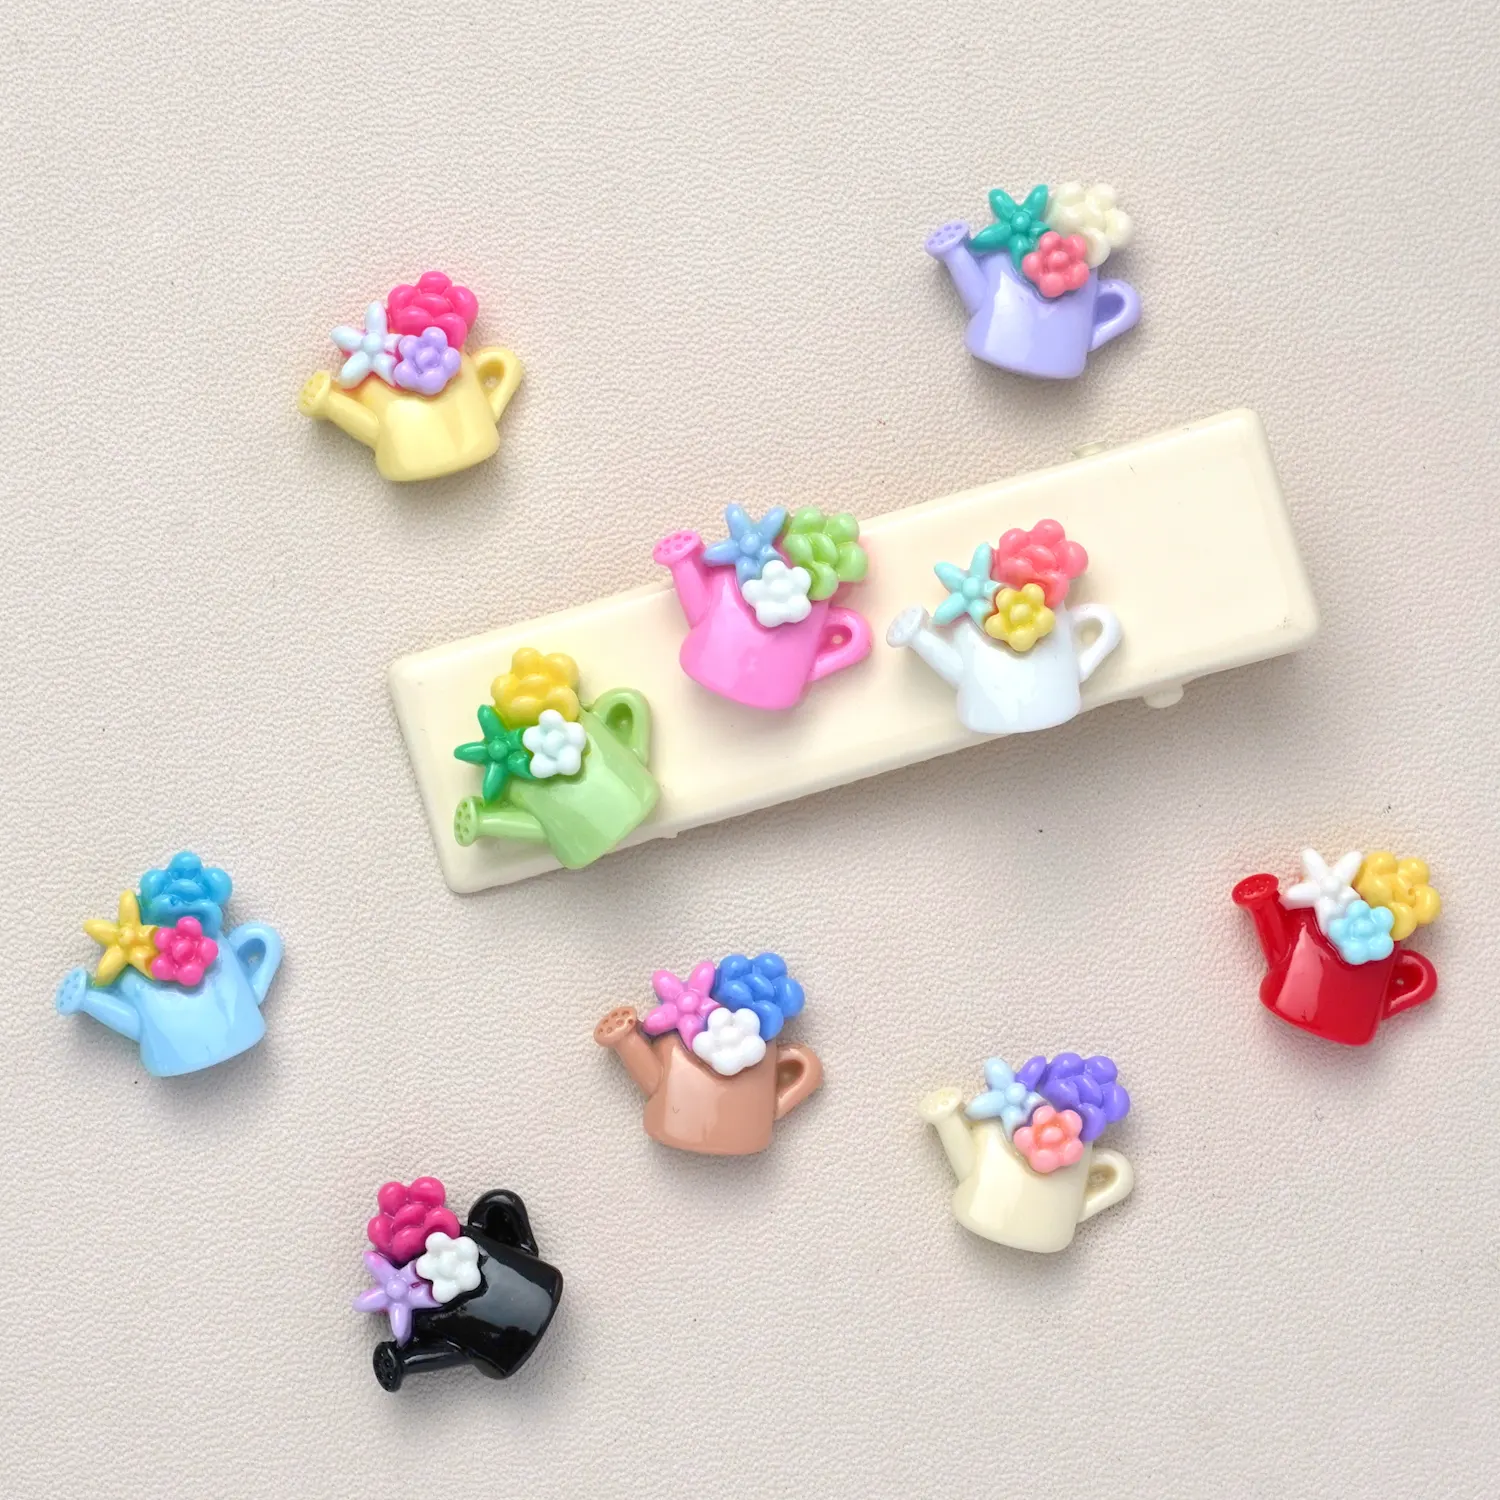 Wholesale Colorful Cute Cartoon Flower Resin Art Crafts For Scrapbooking Embellishment Nail Decoration Cream Glue DIY Materials